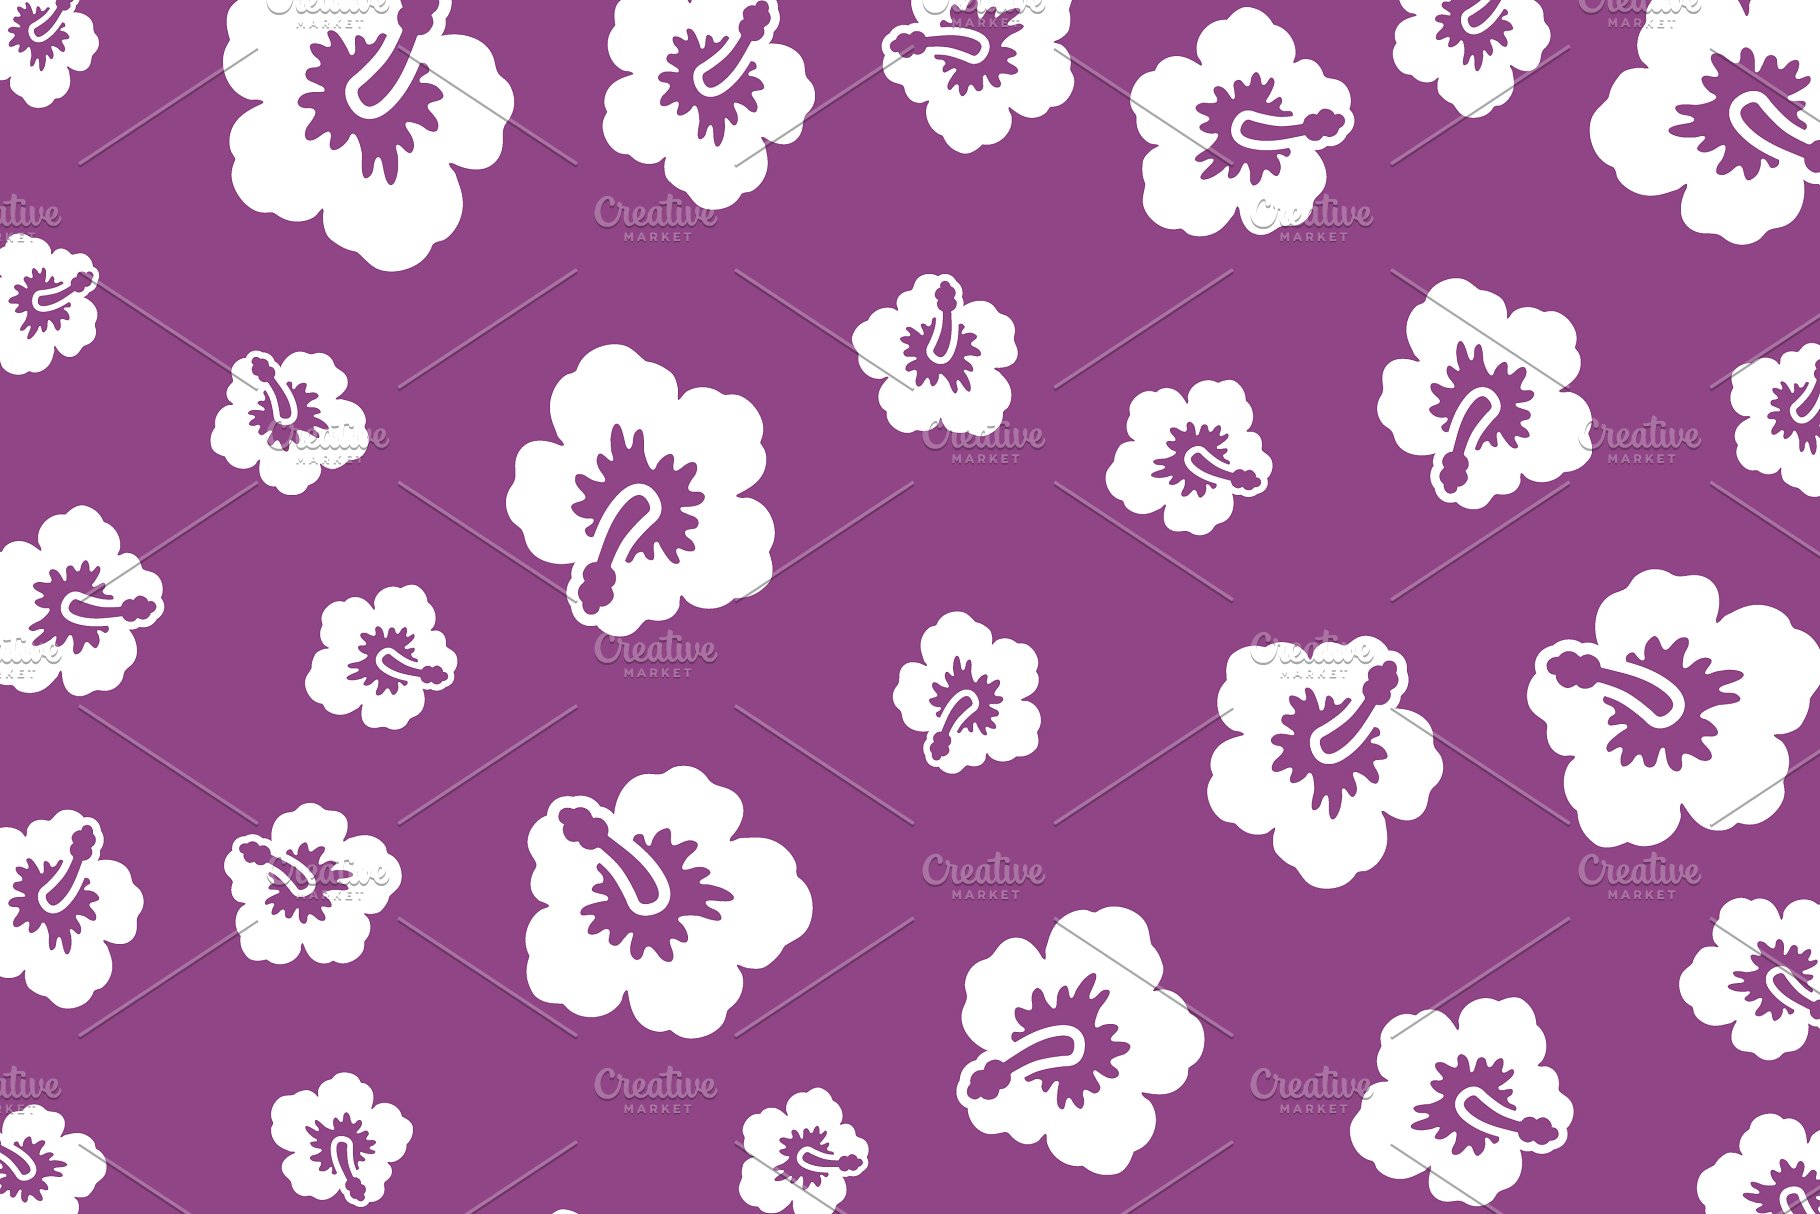 60种配色1440款花卉图案纹理 1,440 Floral Patterns in 60 Colors插图(24)